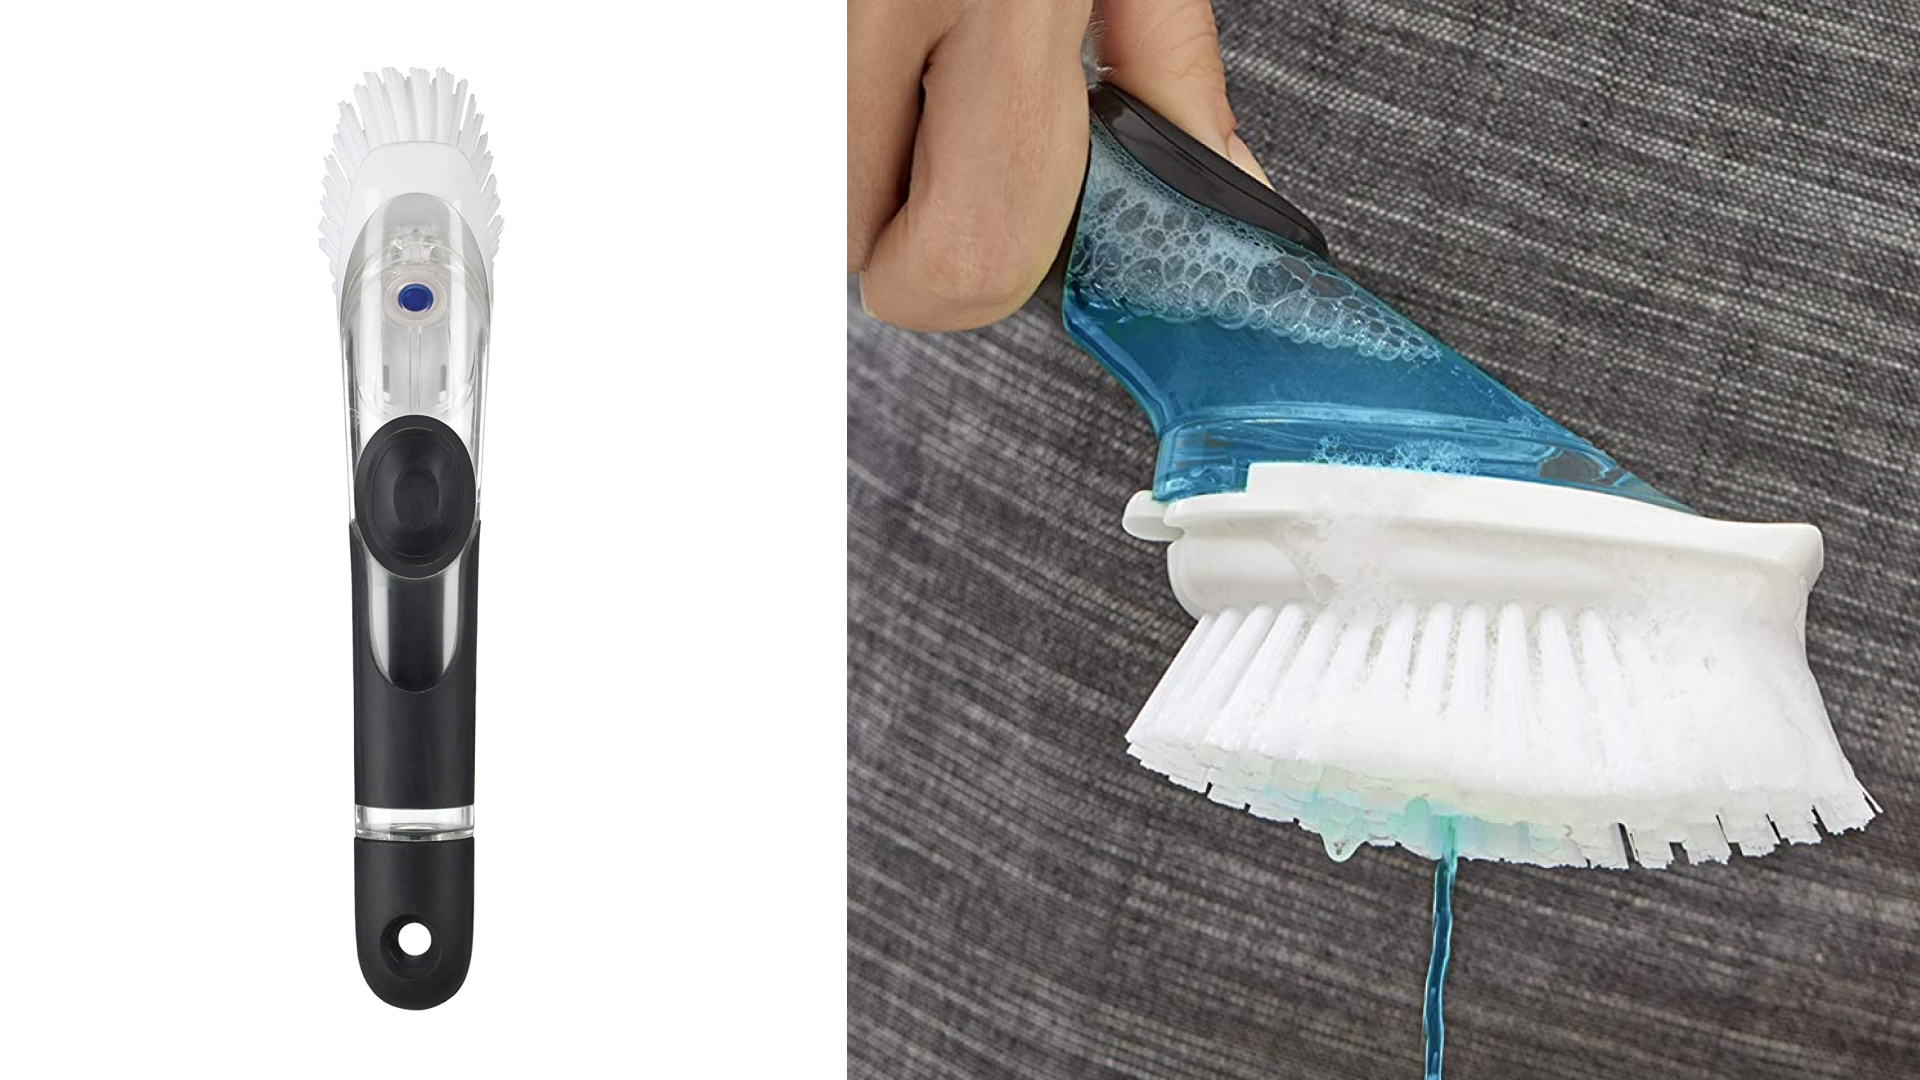 dish scrubbing brush that also dispenses soap